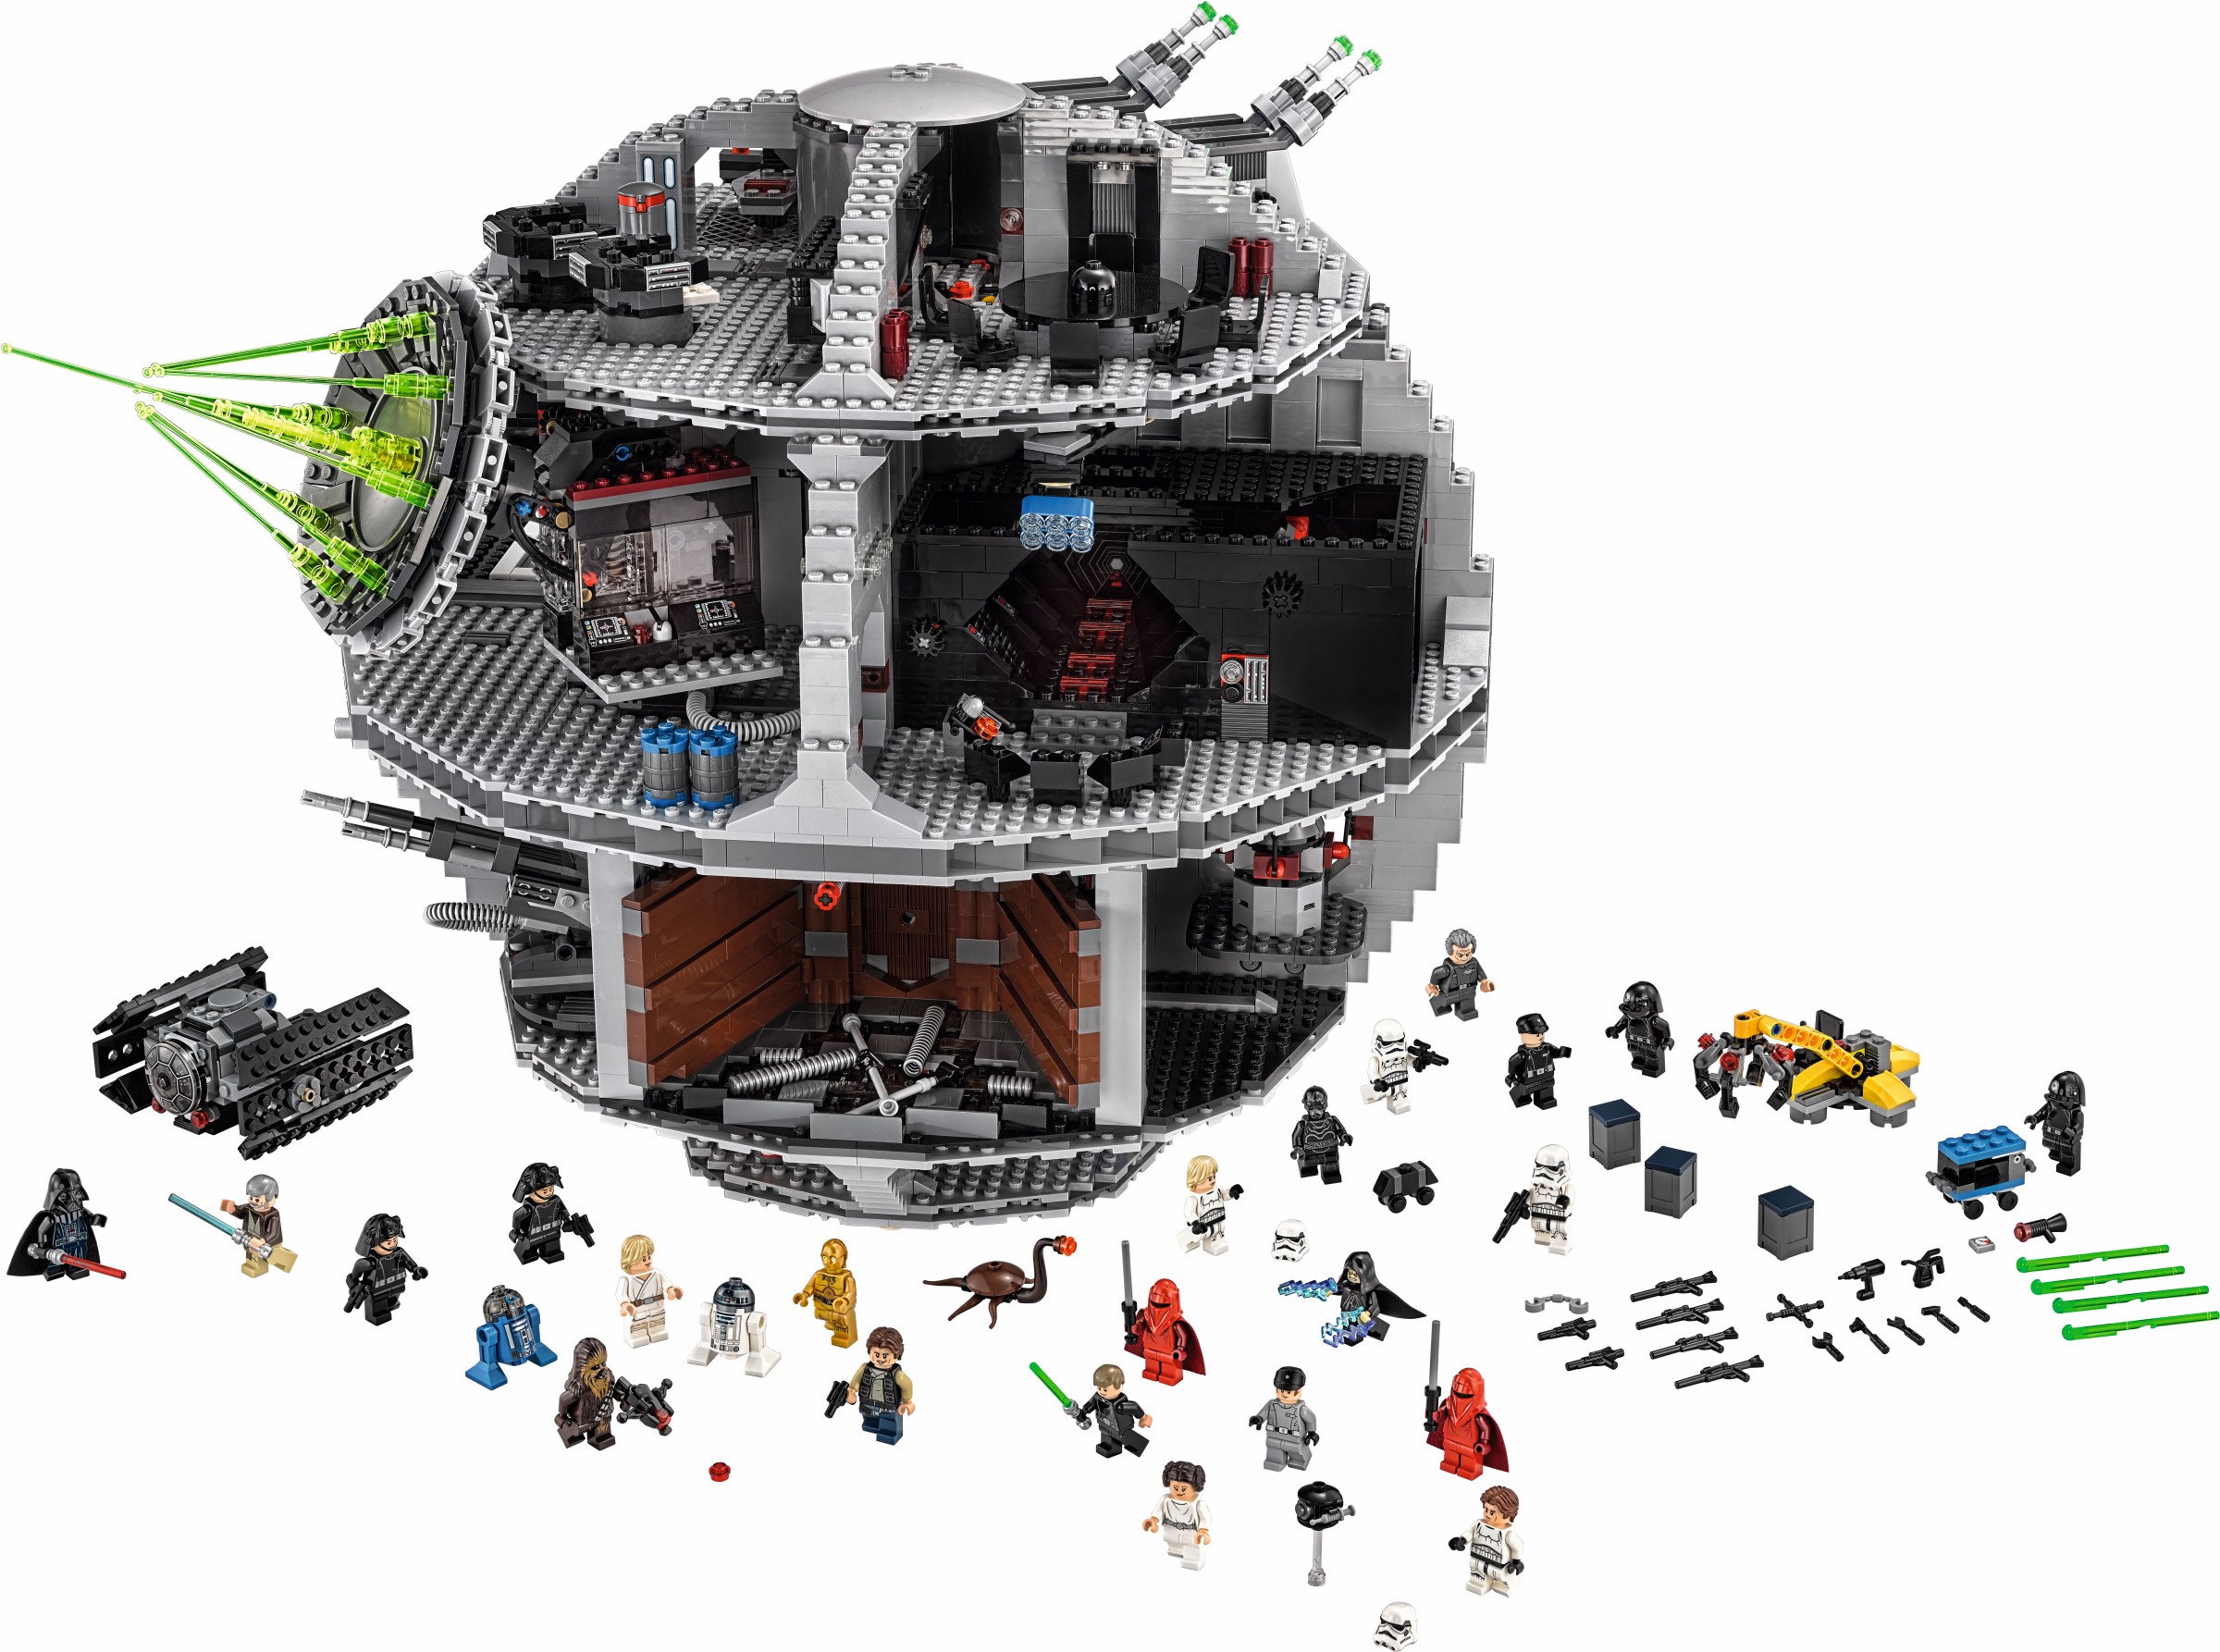 Lego Star Wars Princess Leia Minifigure SW0779 Death Star 75159 NEW 